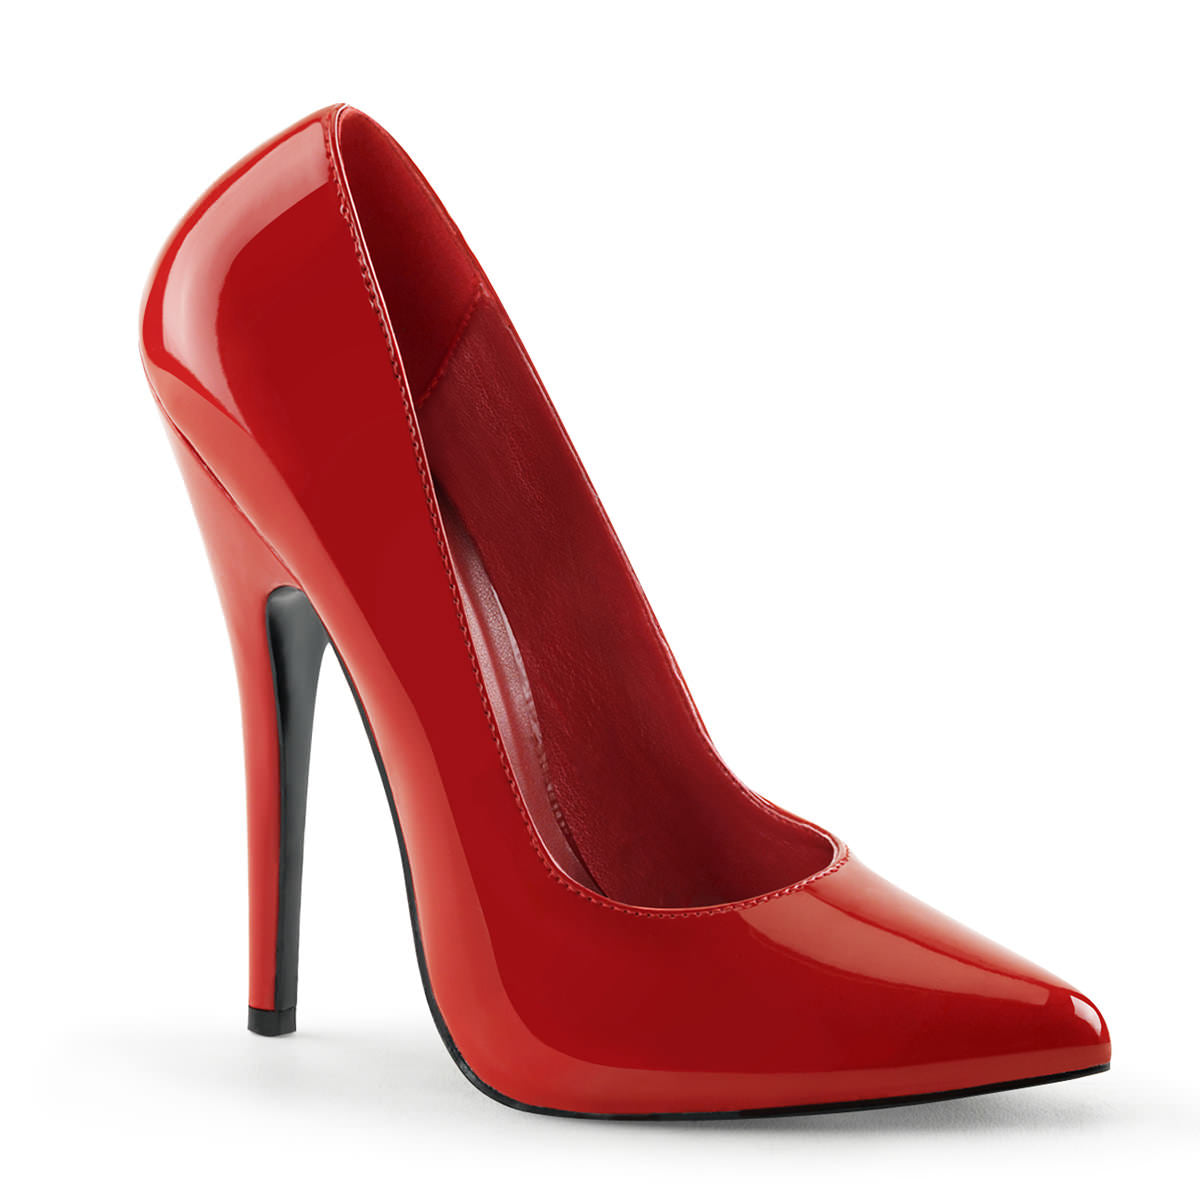 6 Inch Heel DOMINA-420 Red Patent